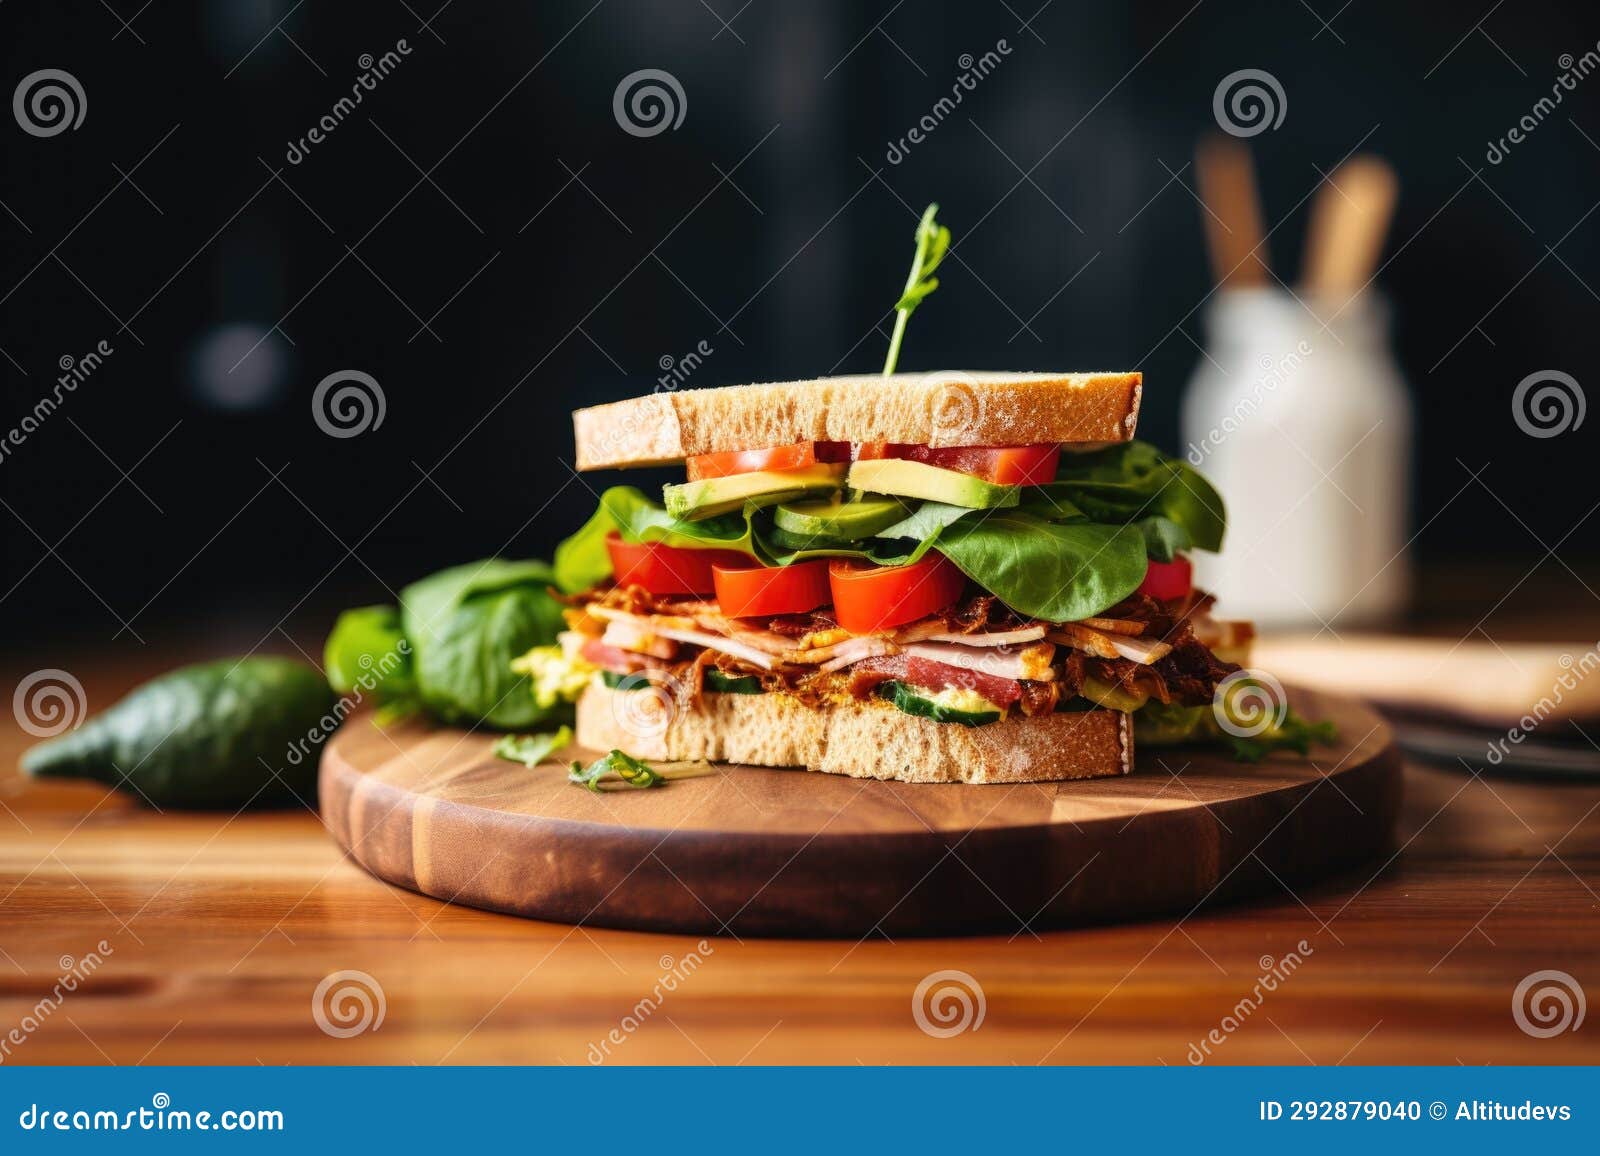 A Simple, Minimalist Clubhouse Sandwich on a Circular Wooden Board ...